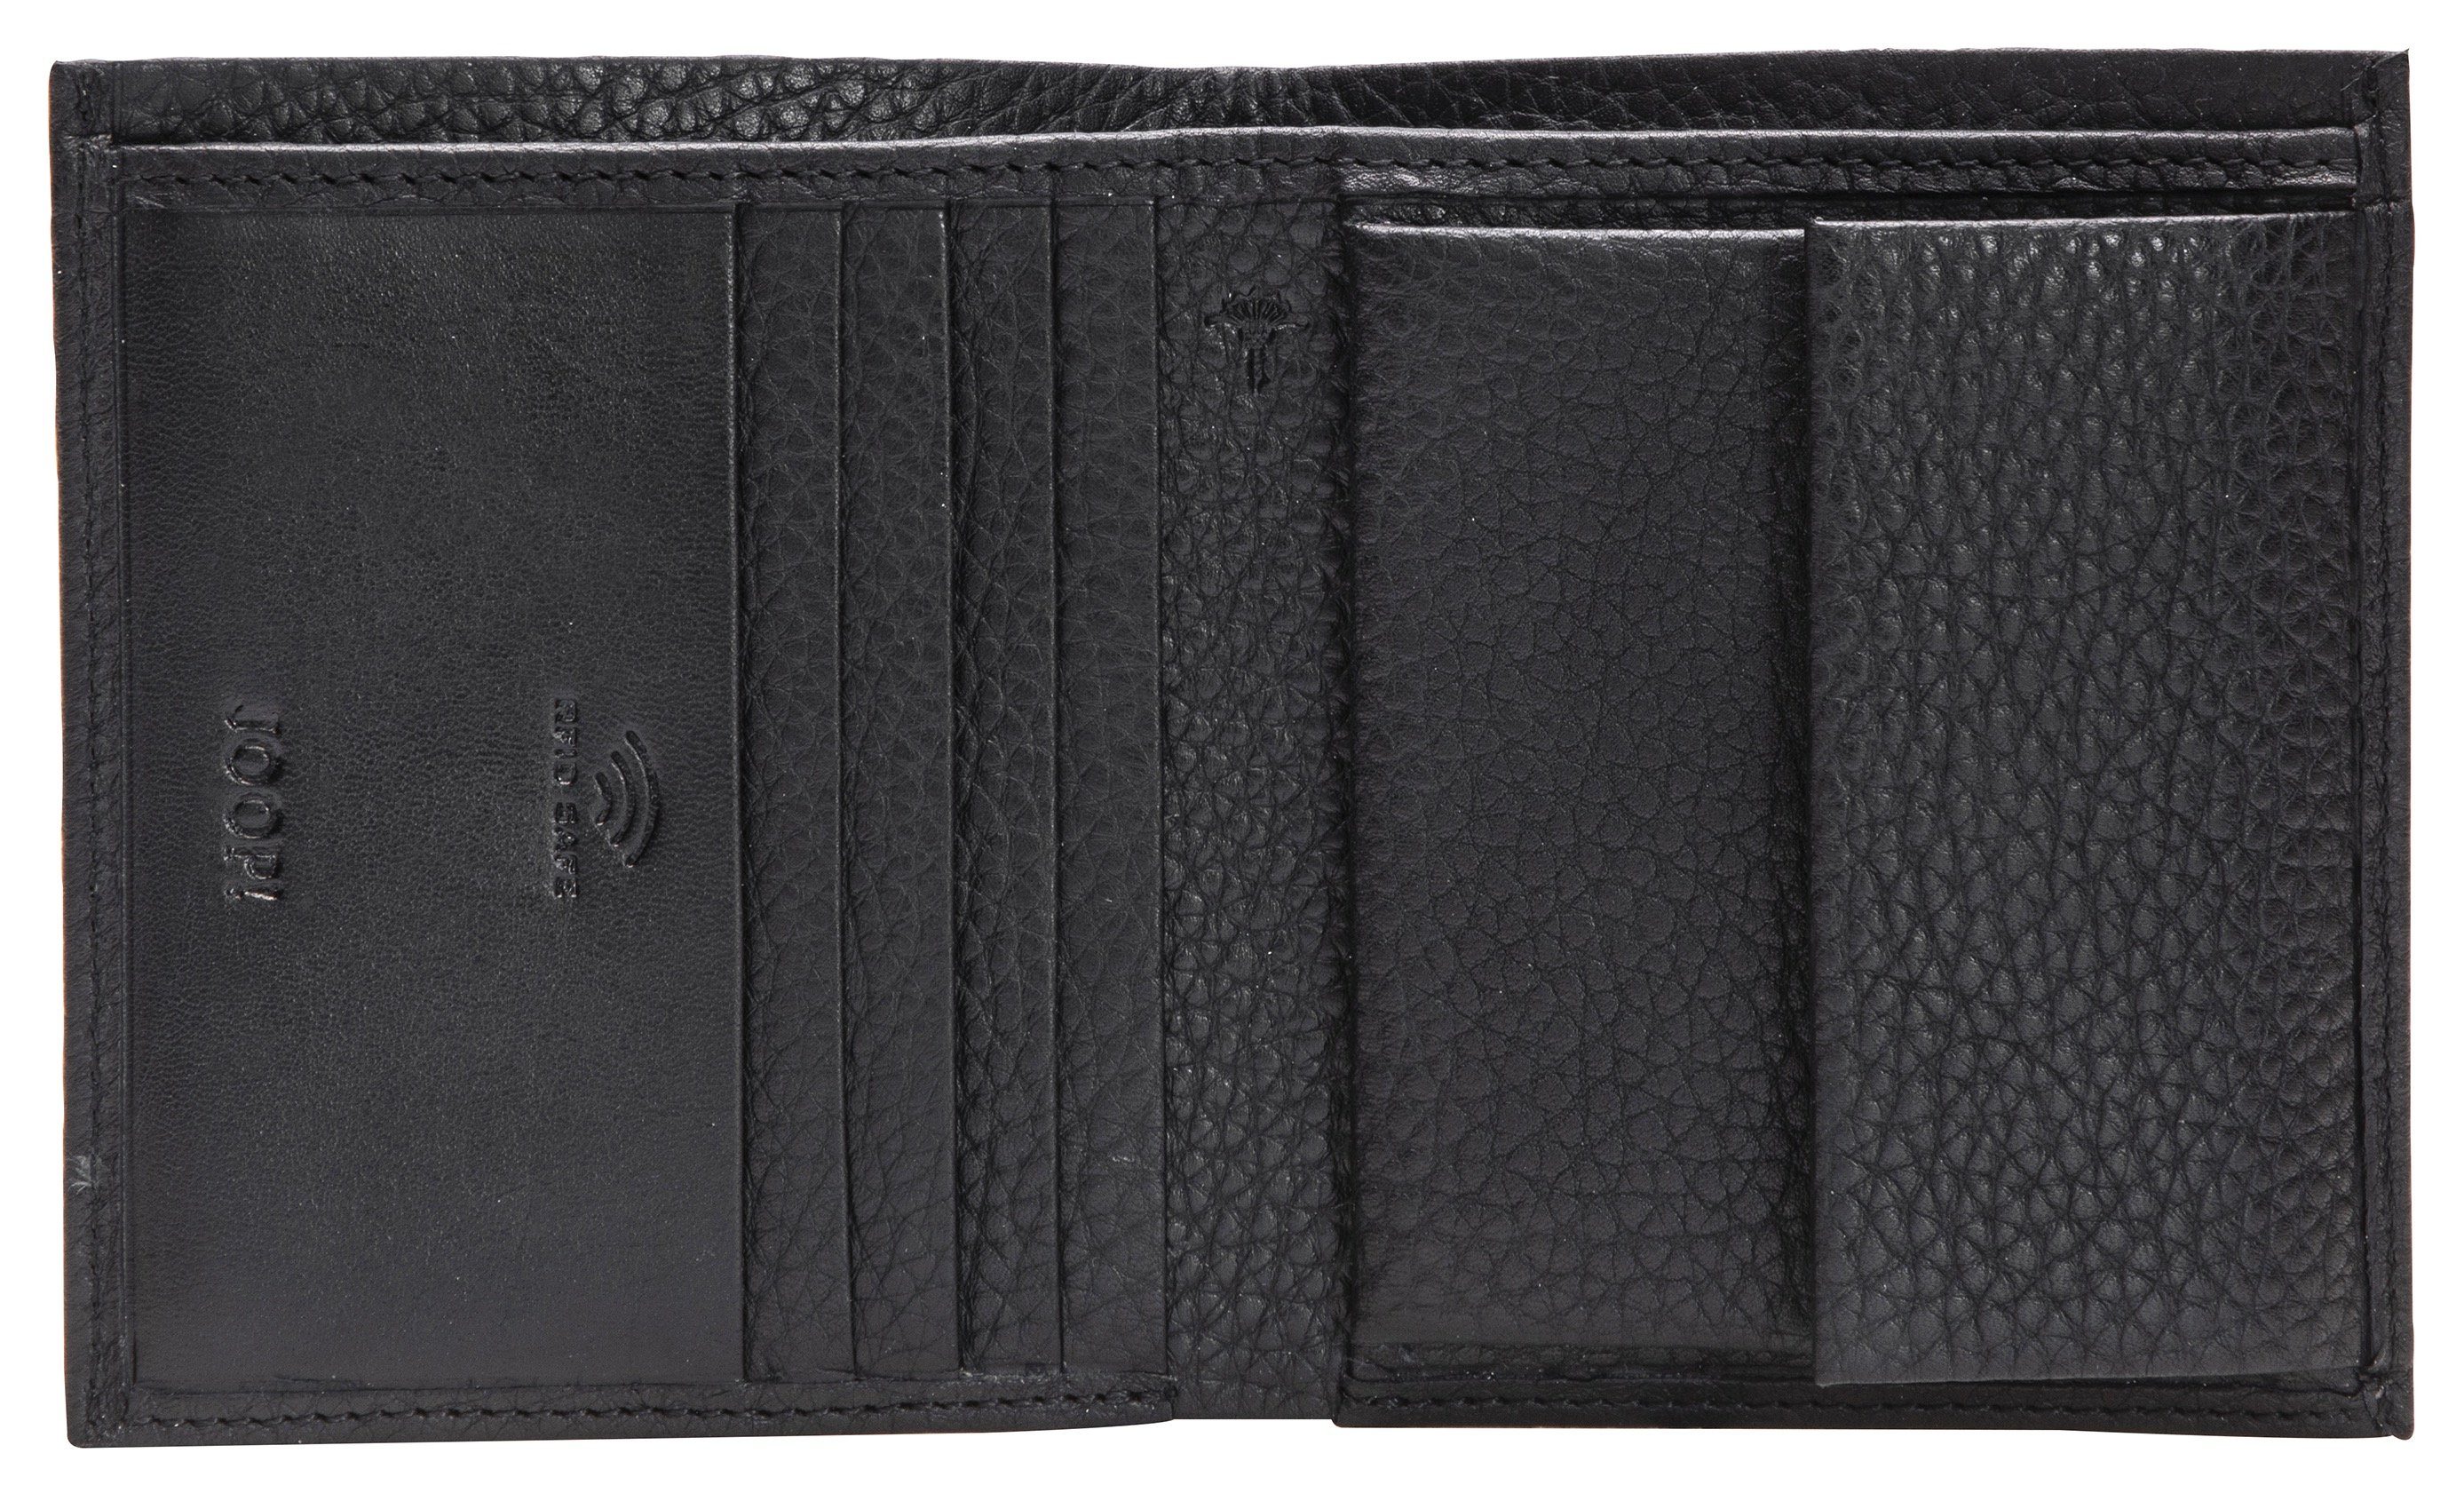 Joop! Geldbörse cardona daphnis billfold aus anthrazitfarbenem mit Black v6, Beschlägen Metall